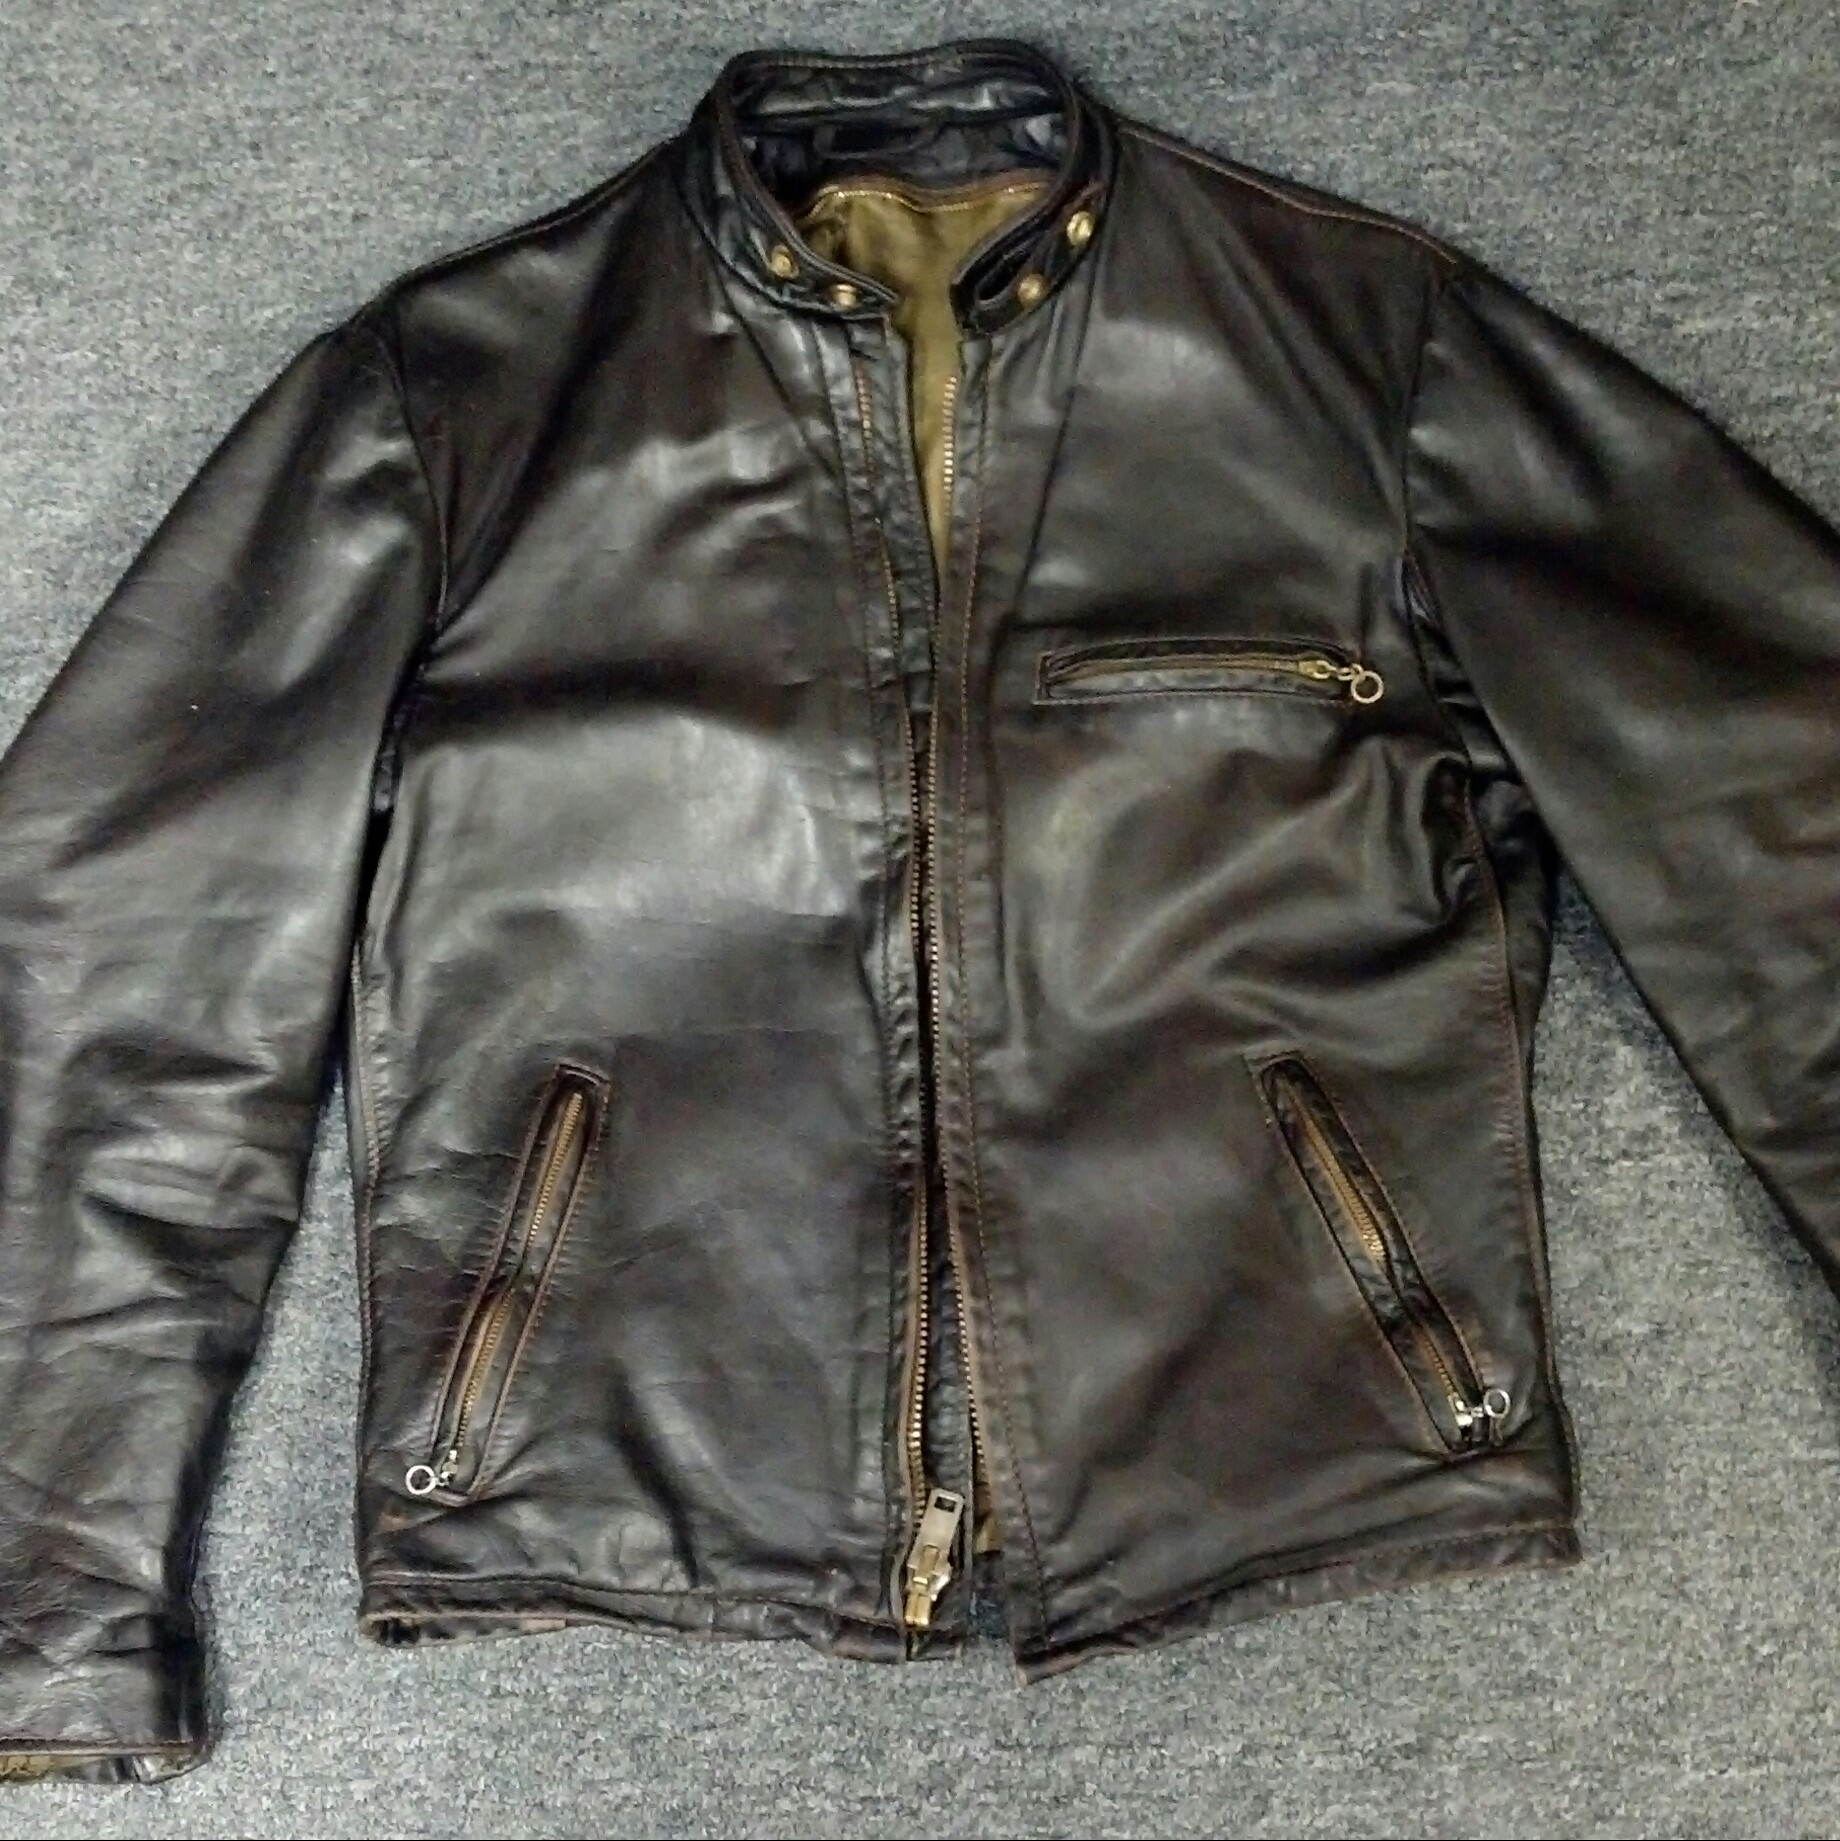 Does washing/soaking leather jackets substantially harm them or weaken ...